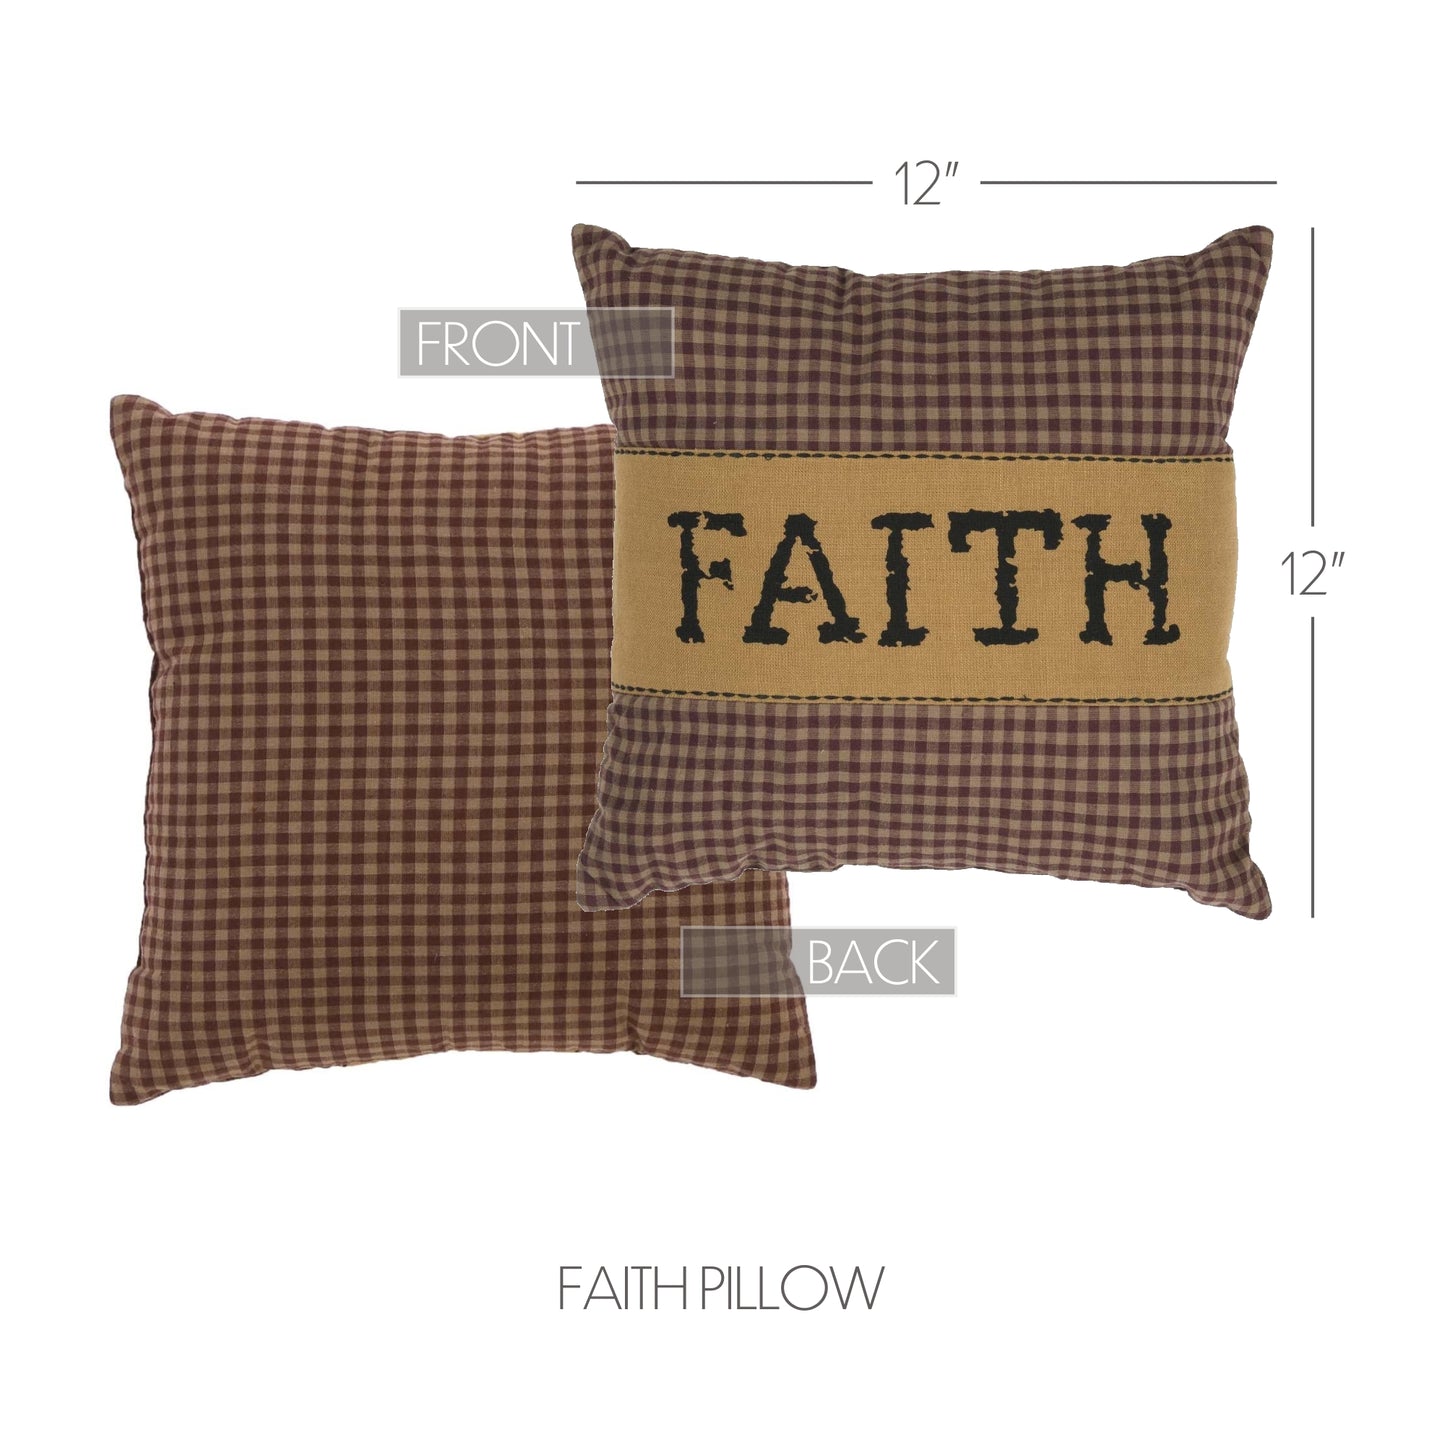 34278-Heritage-Farms-Faith-Pillow-12x12-image-1